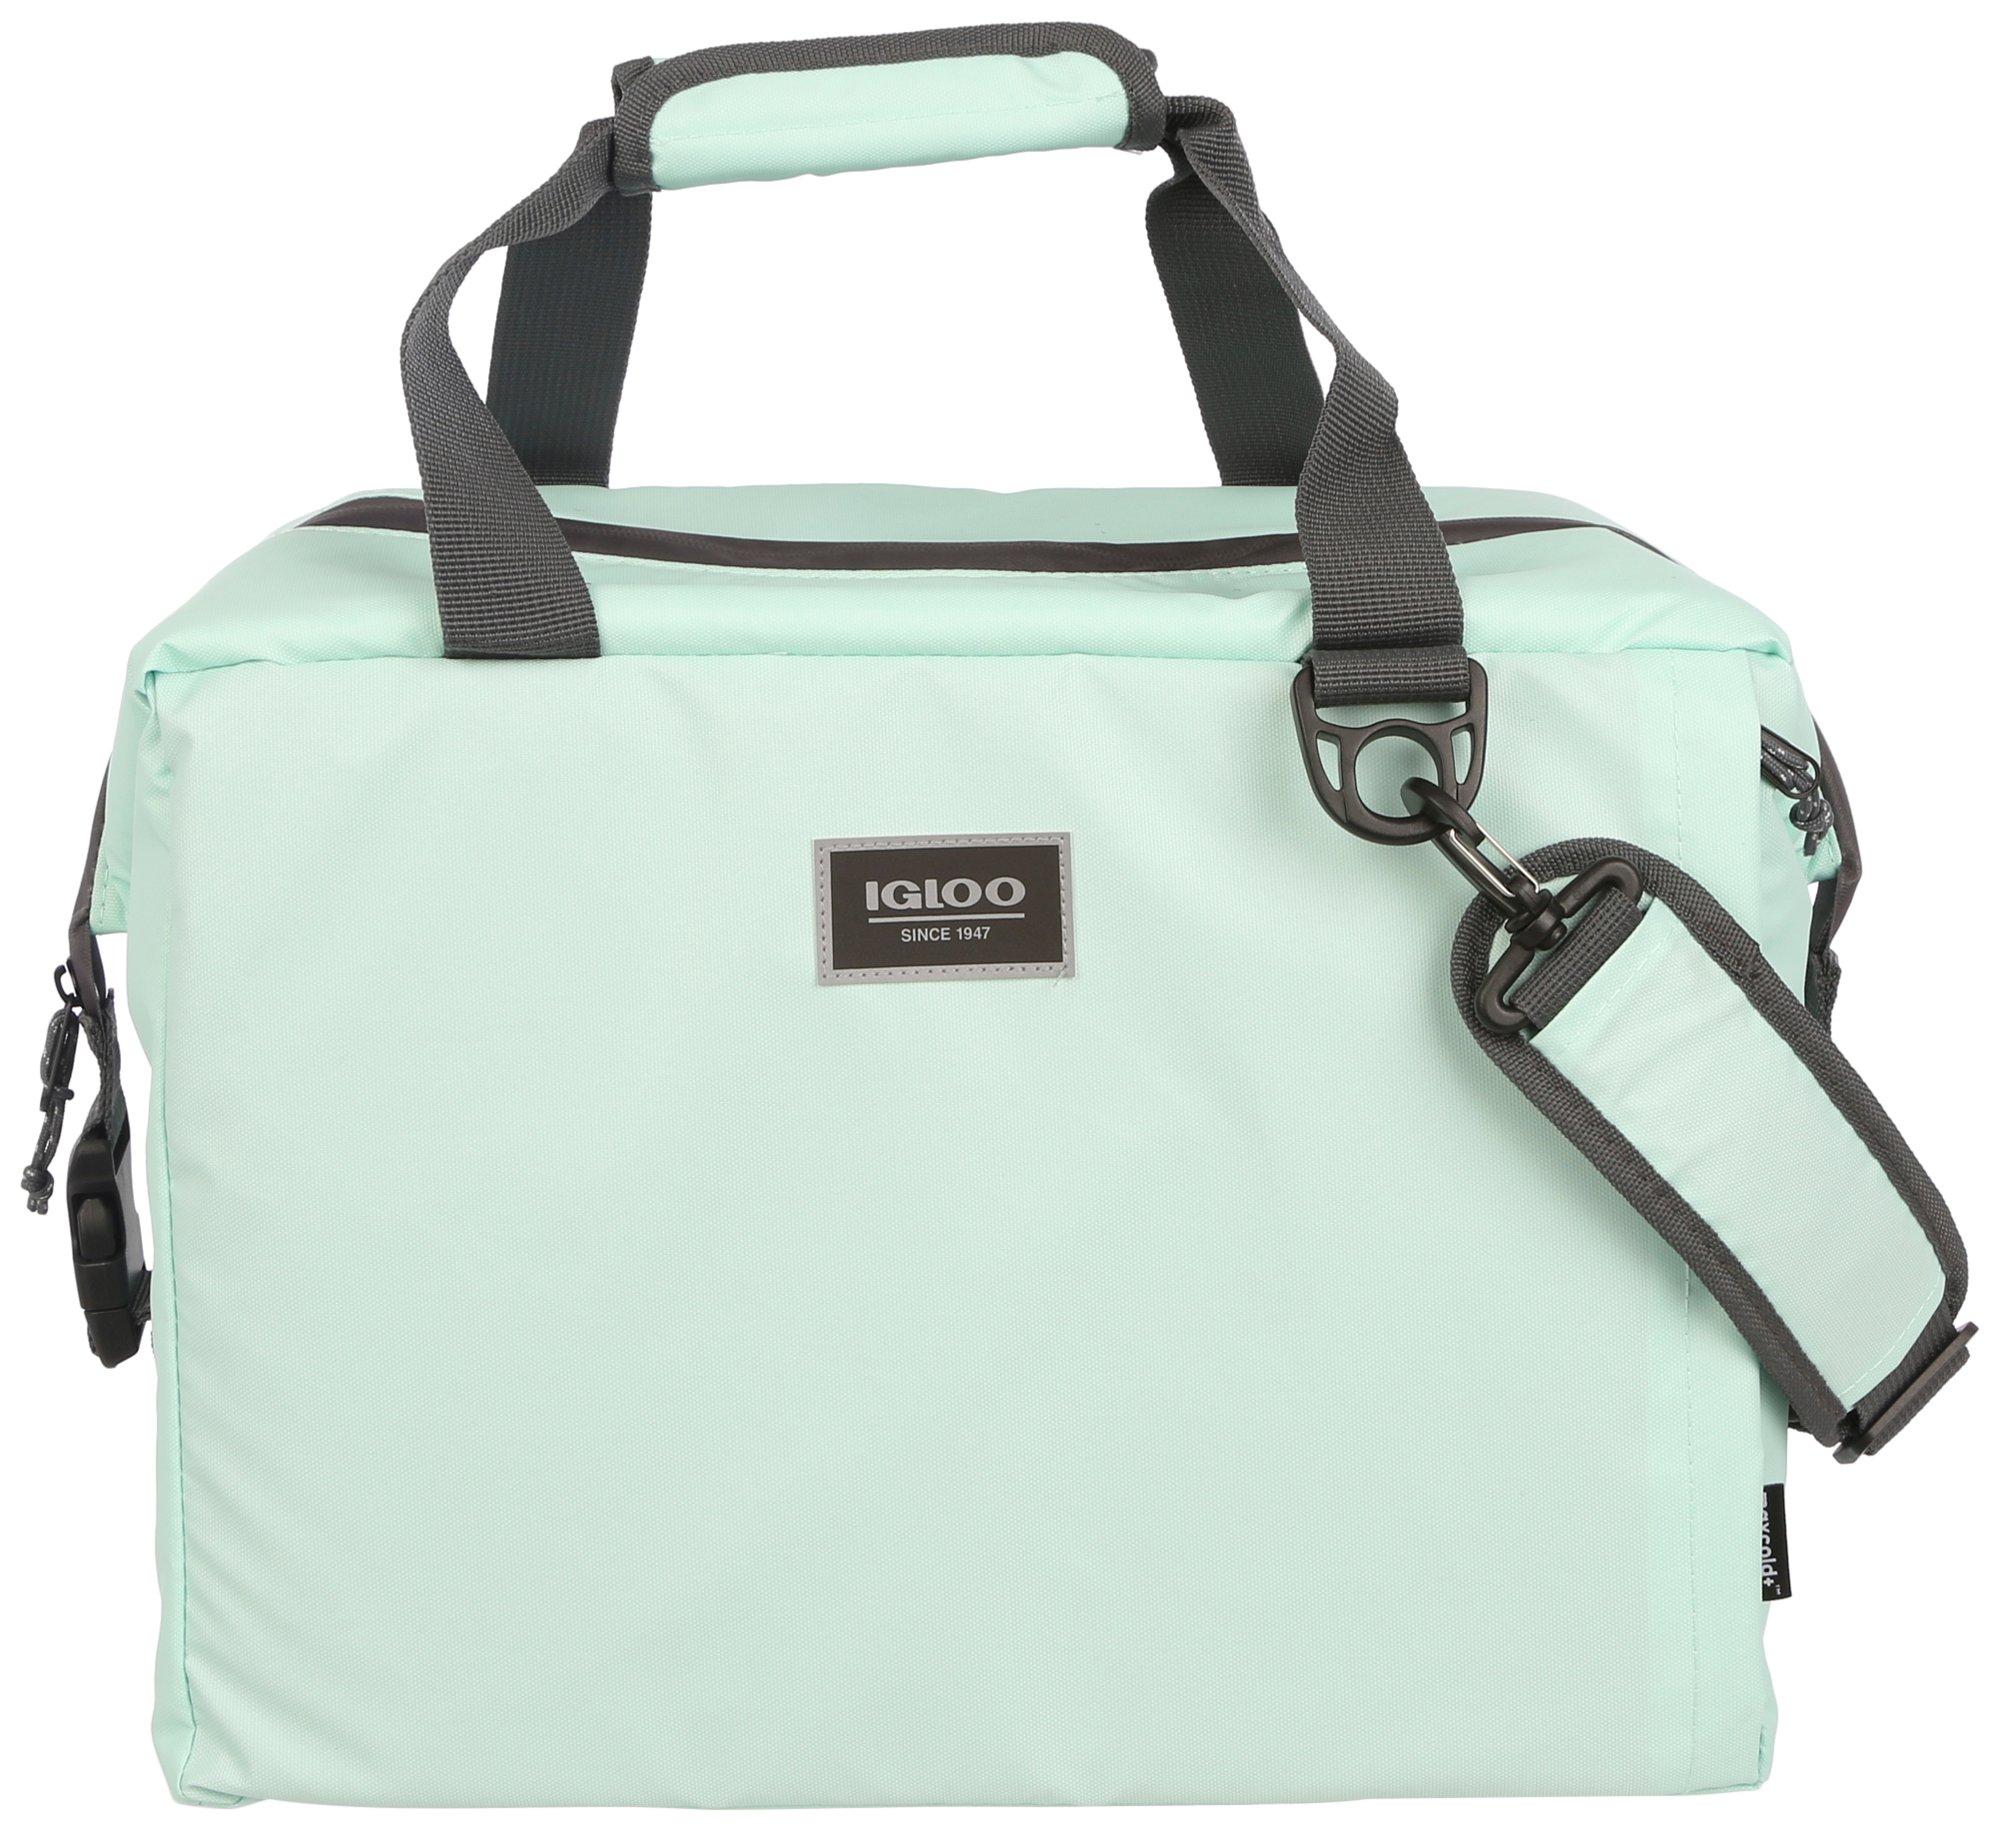 Igloo MaxCold + Snapdown Cooler Bag